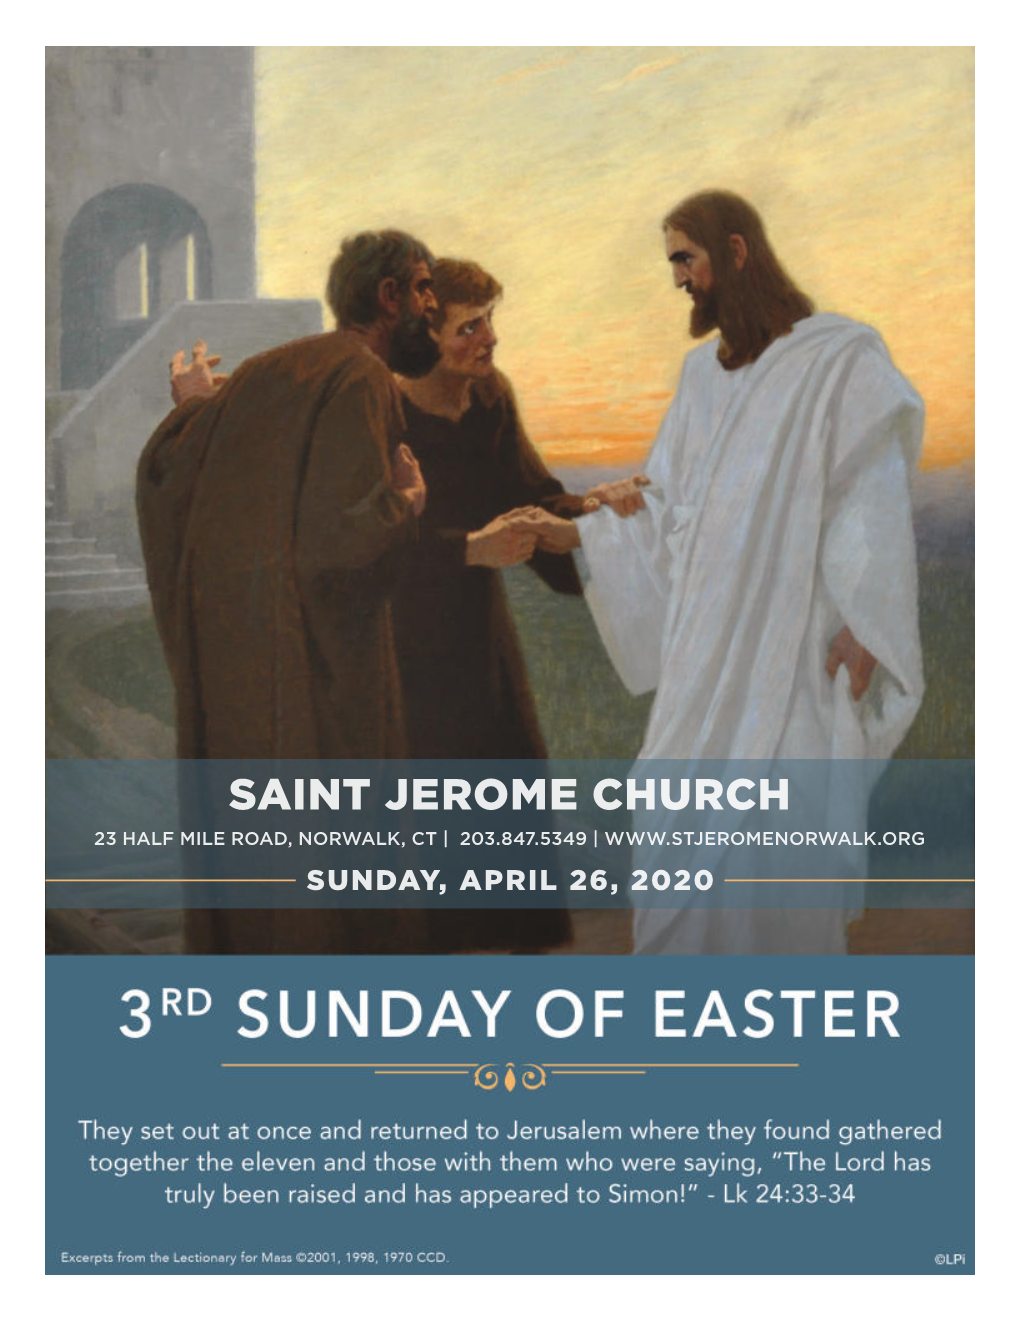 Saint Jerome Church 23 Half Mile Road, Norwalk, Ct | 203.847.5349 | Sunday, April 26, 2020 Weekly Prayer